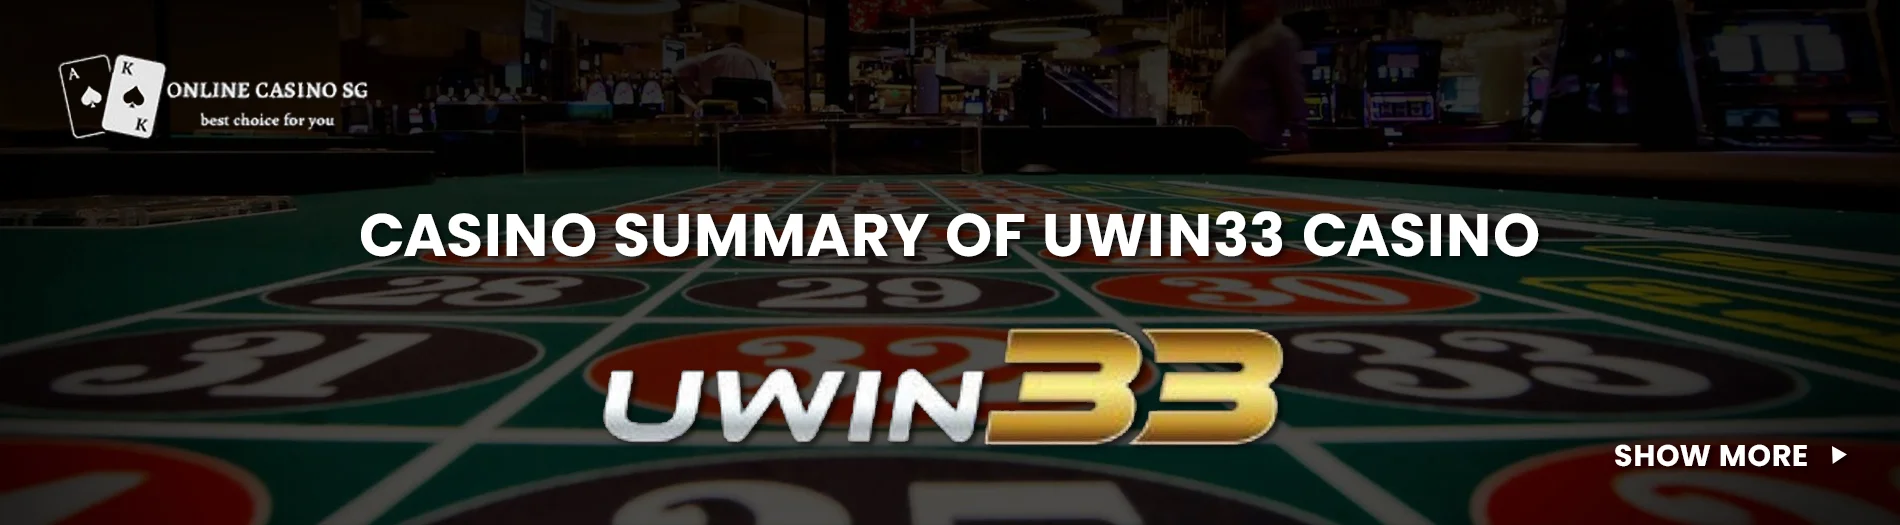 Uwin33 Online Casino in Singapore.